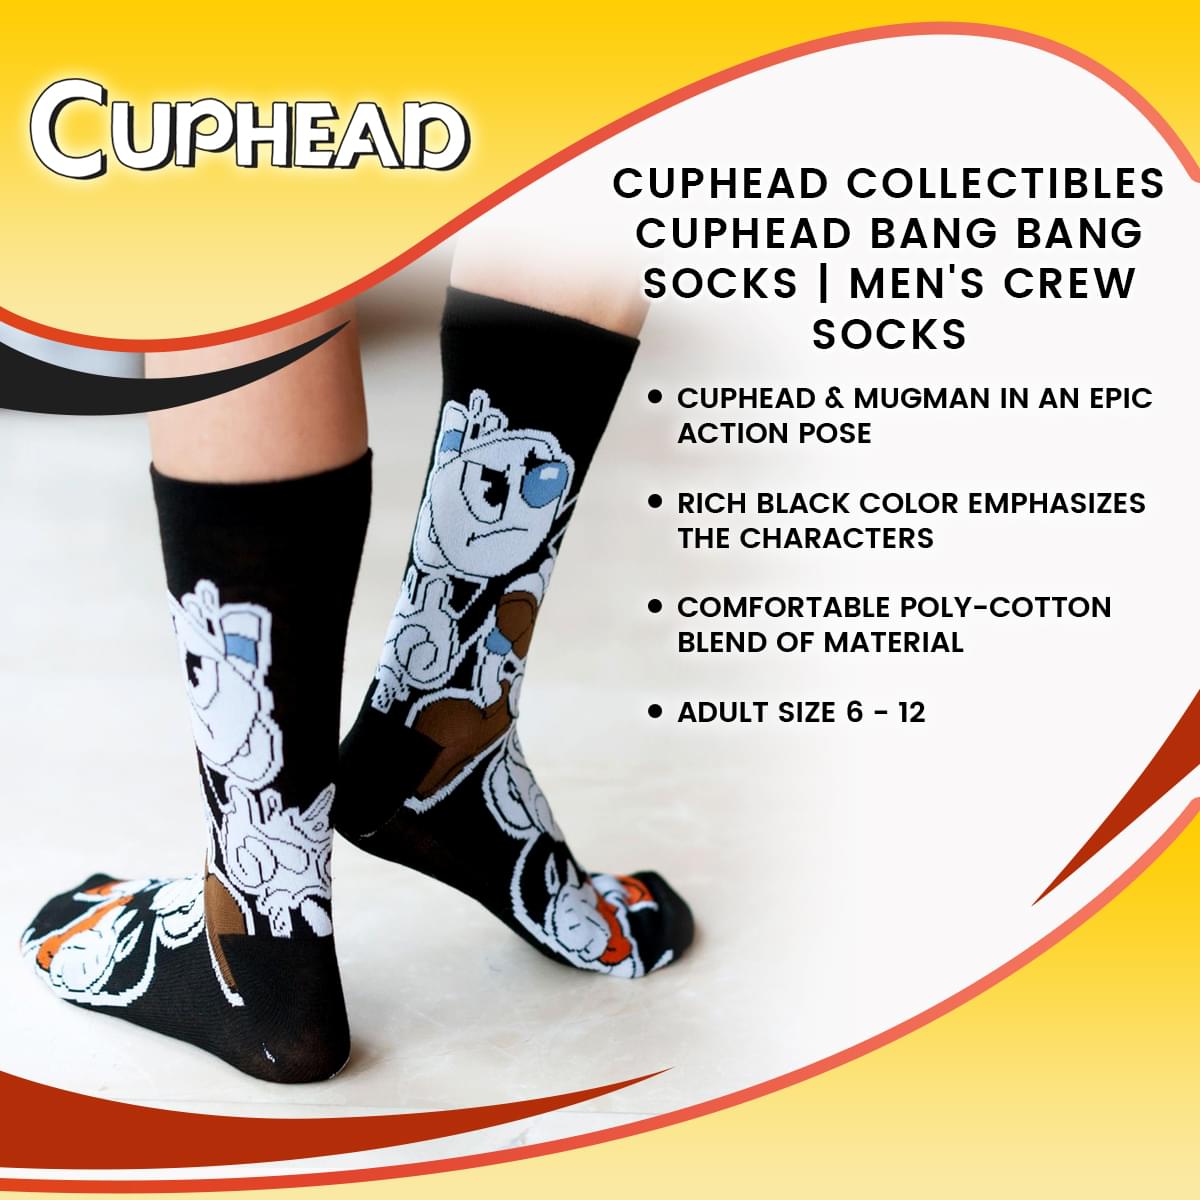 Cuphead Collectibles | Cuphead Bang Bang Socks | Men's Crew Socks